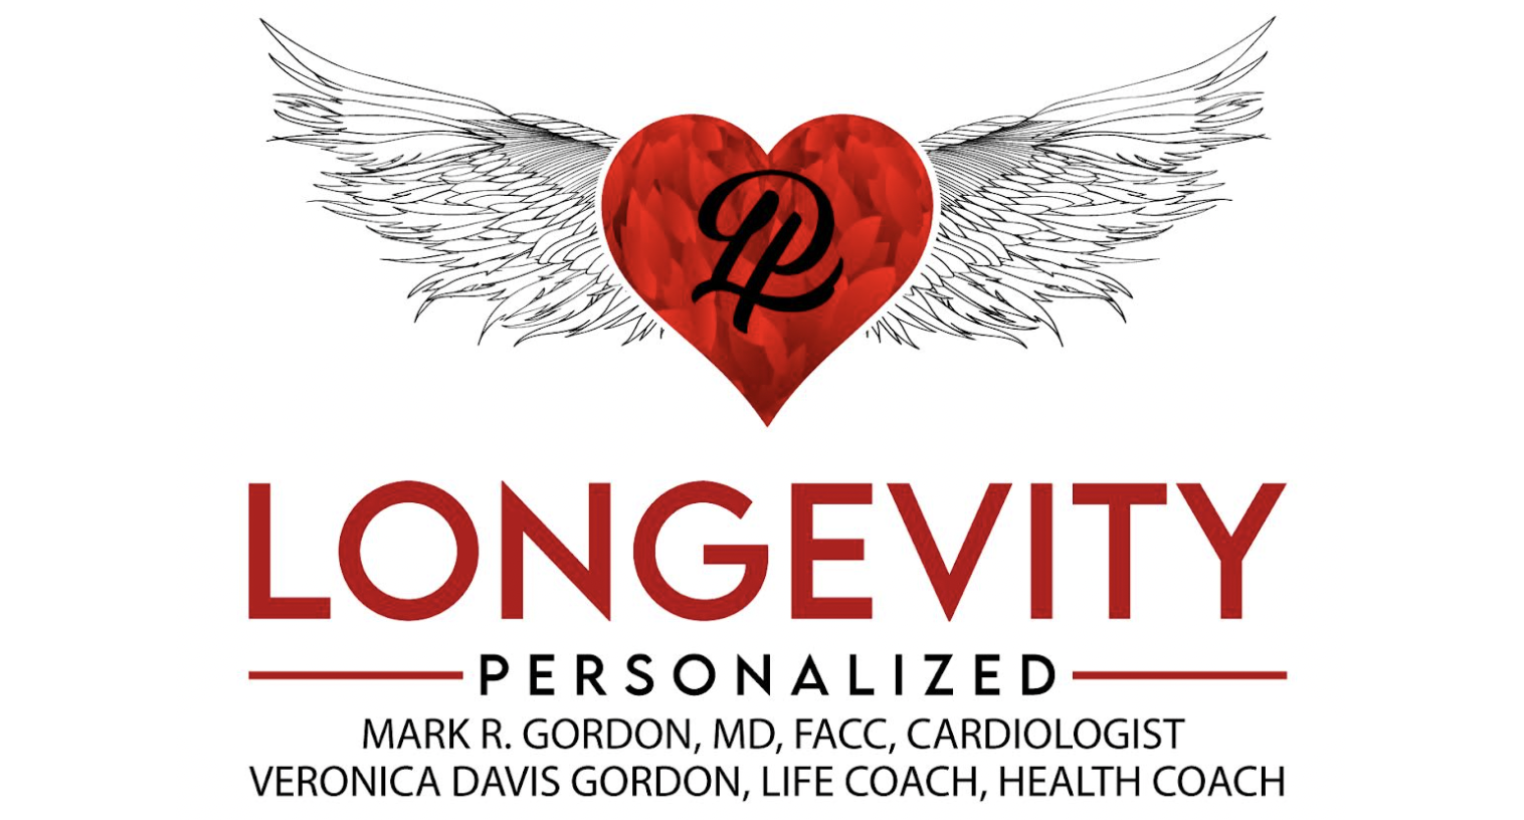 cardiovascular wellness and longevity | Longevity Personalized